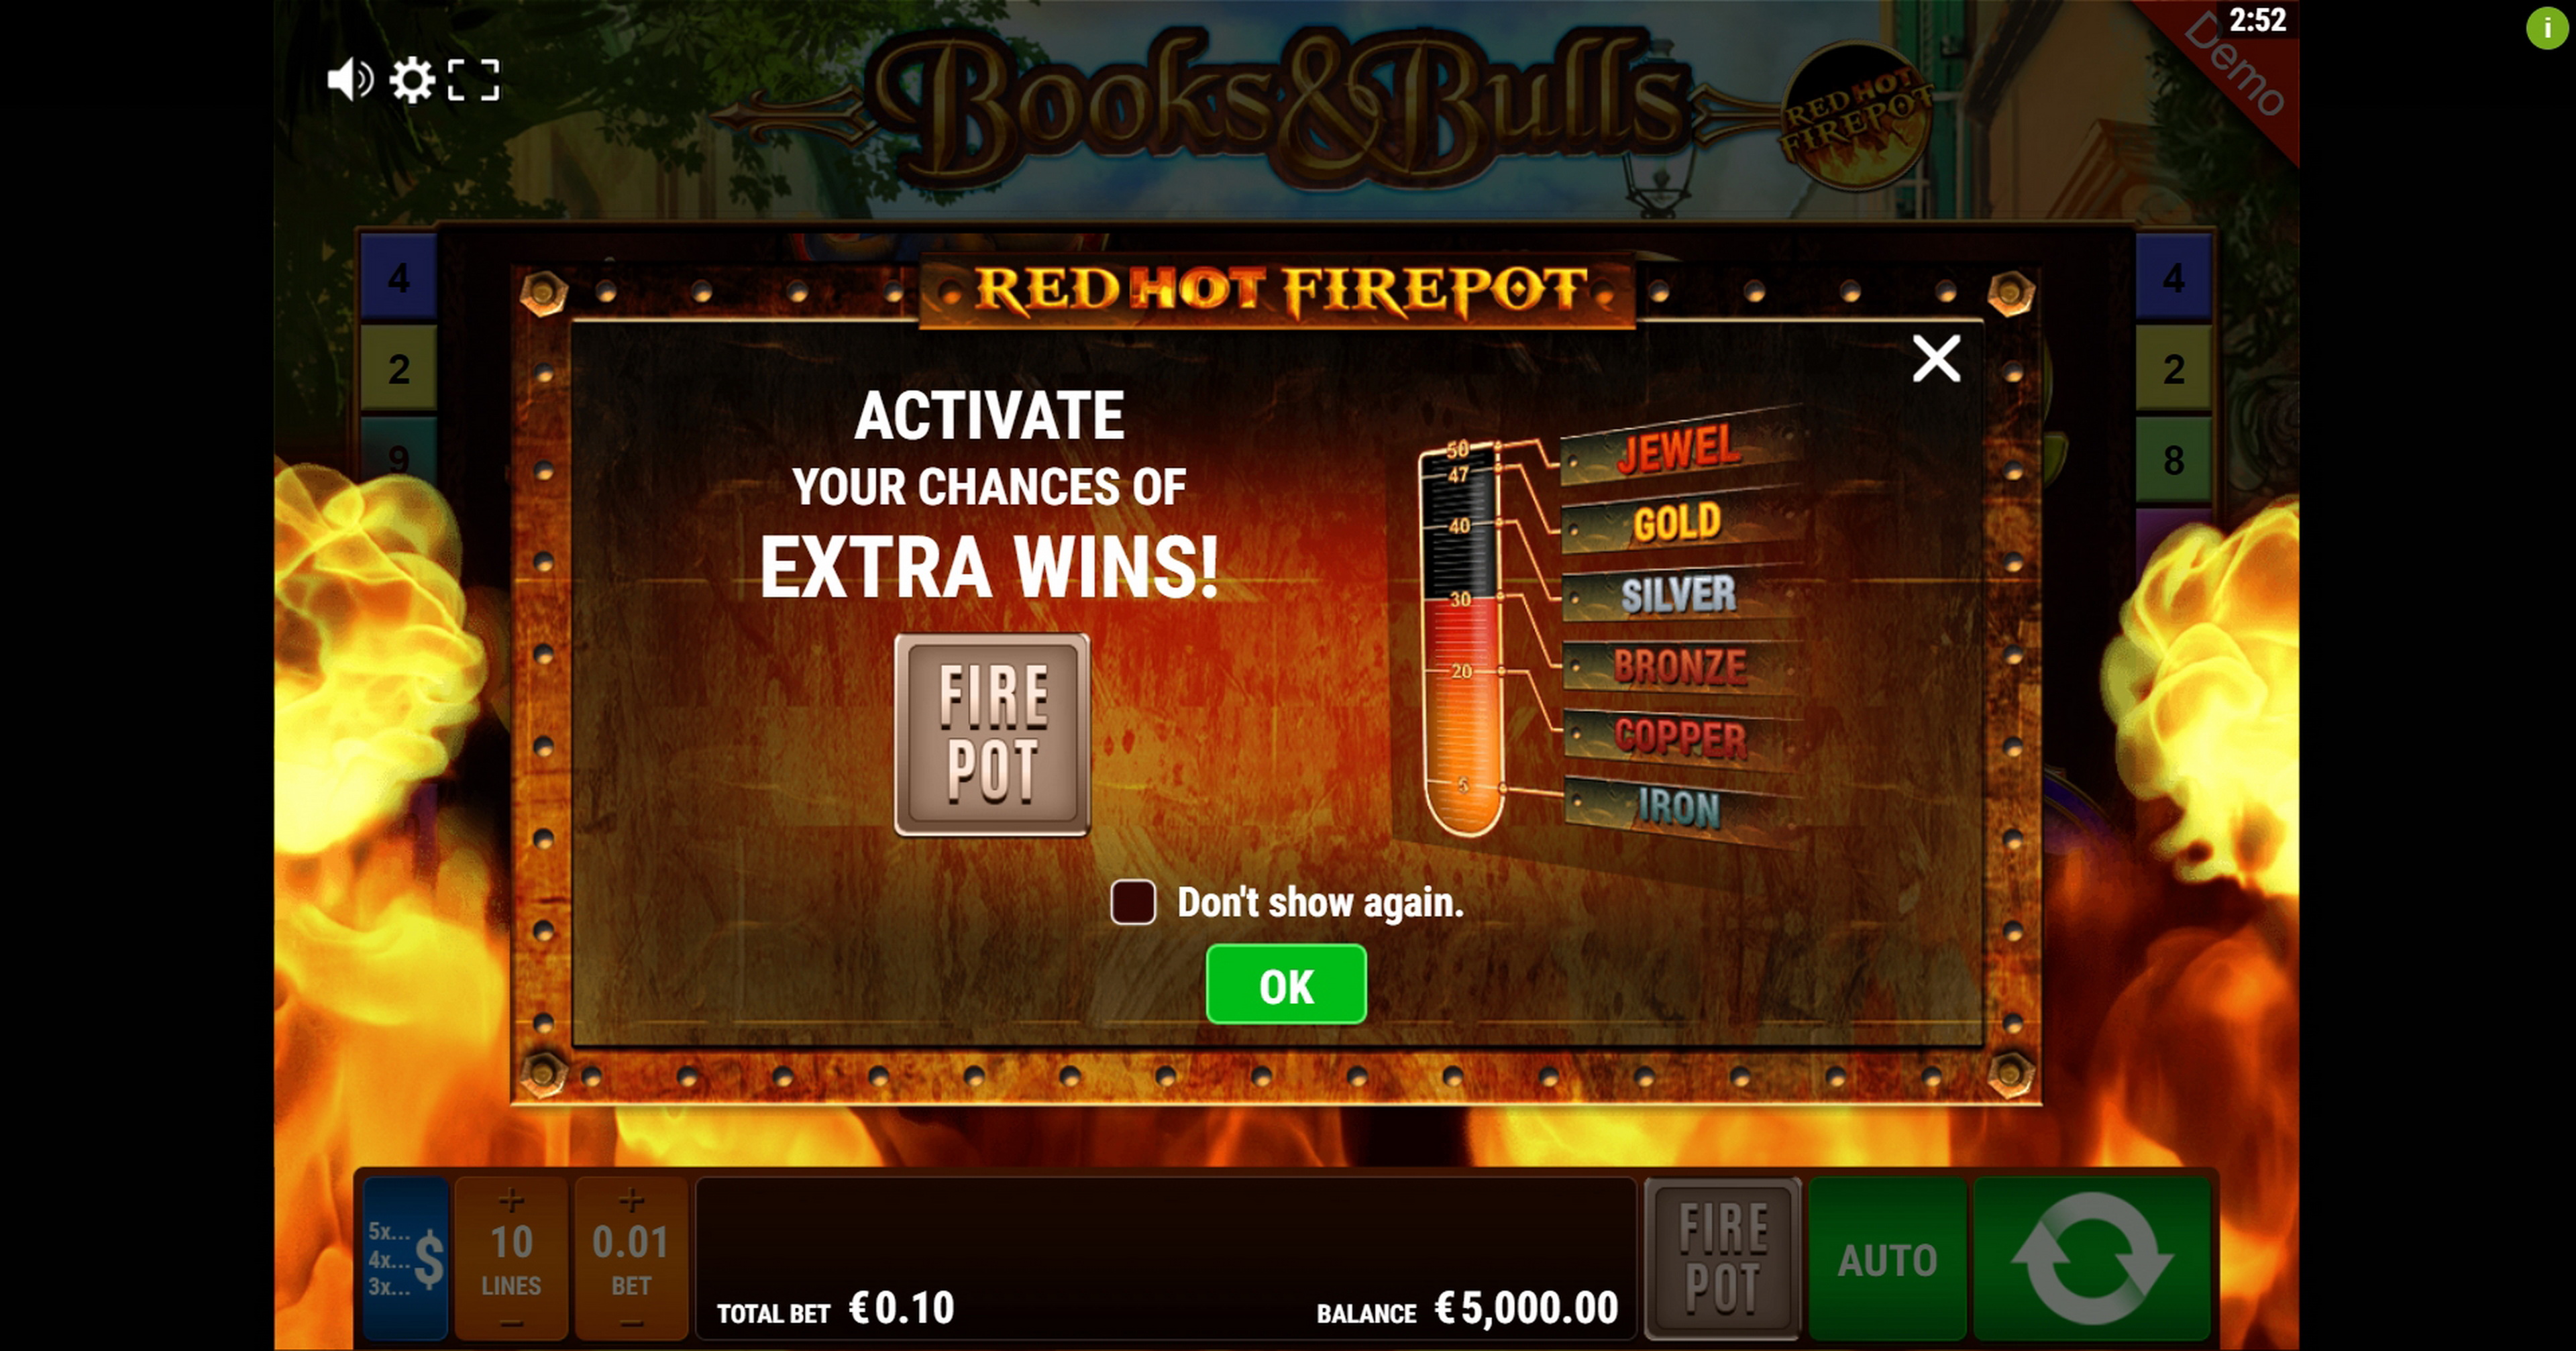 Play Books & Bulls RHFP Free Casino Slot Game by Gamomat